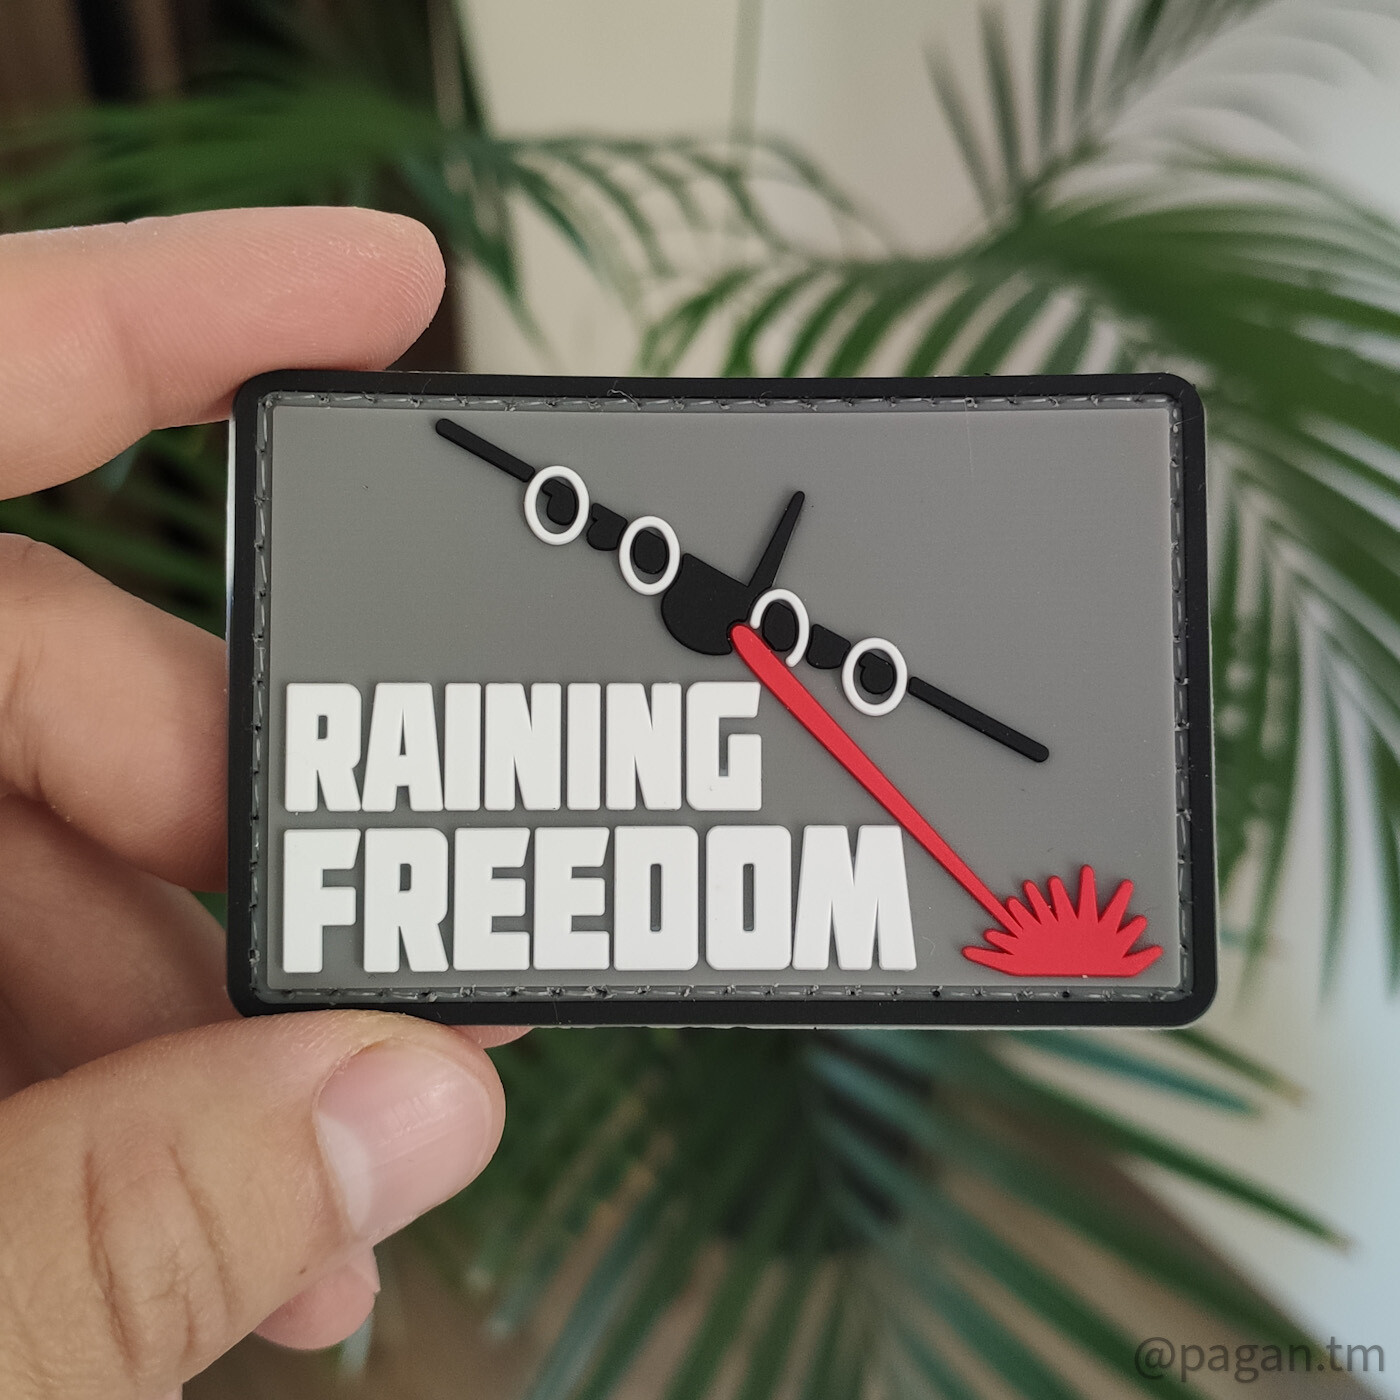 Raining freedom